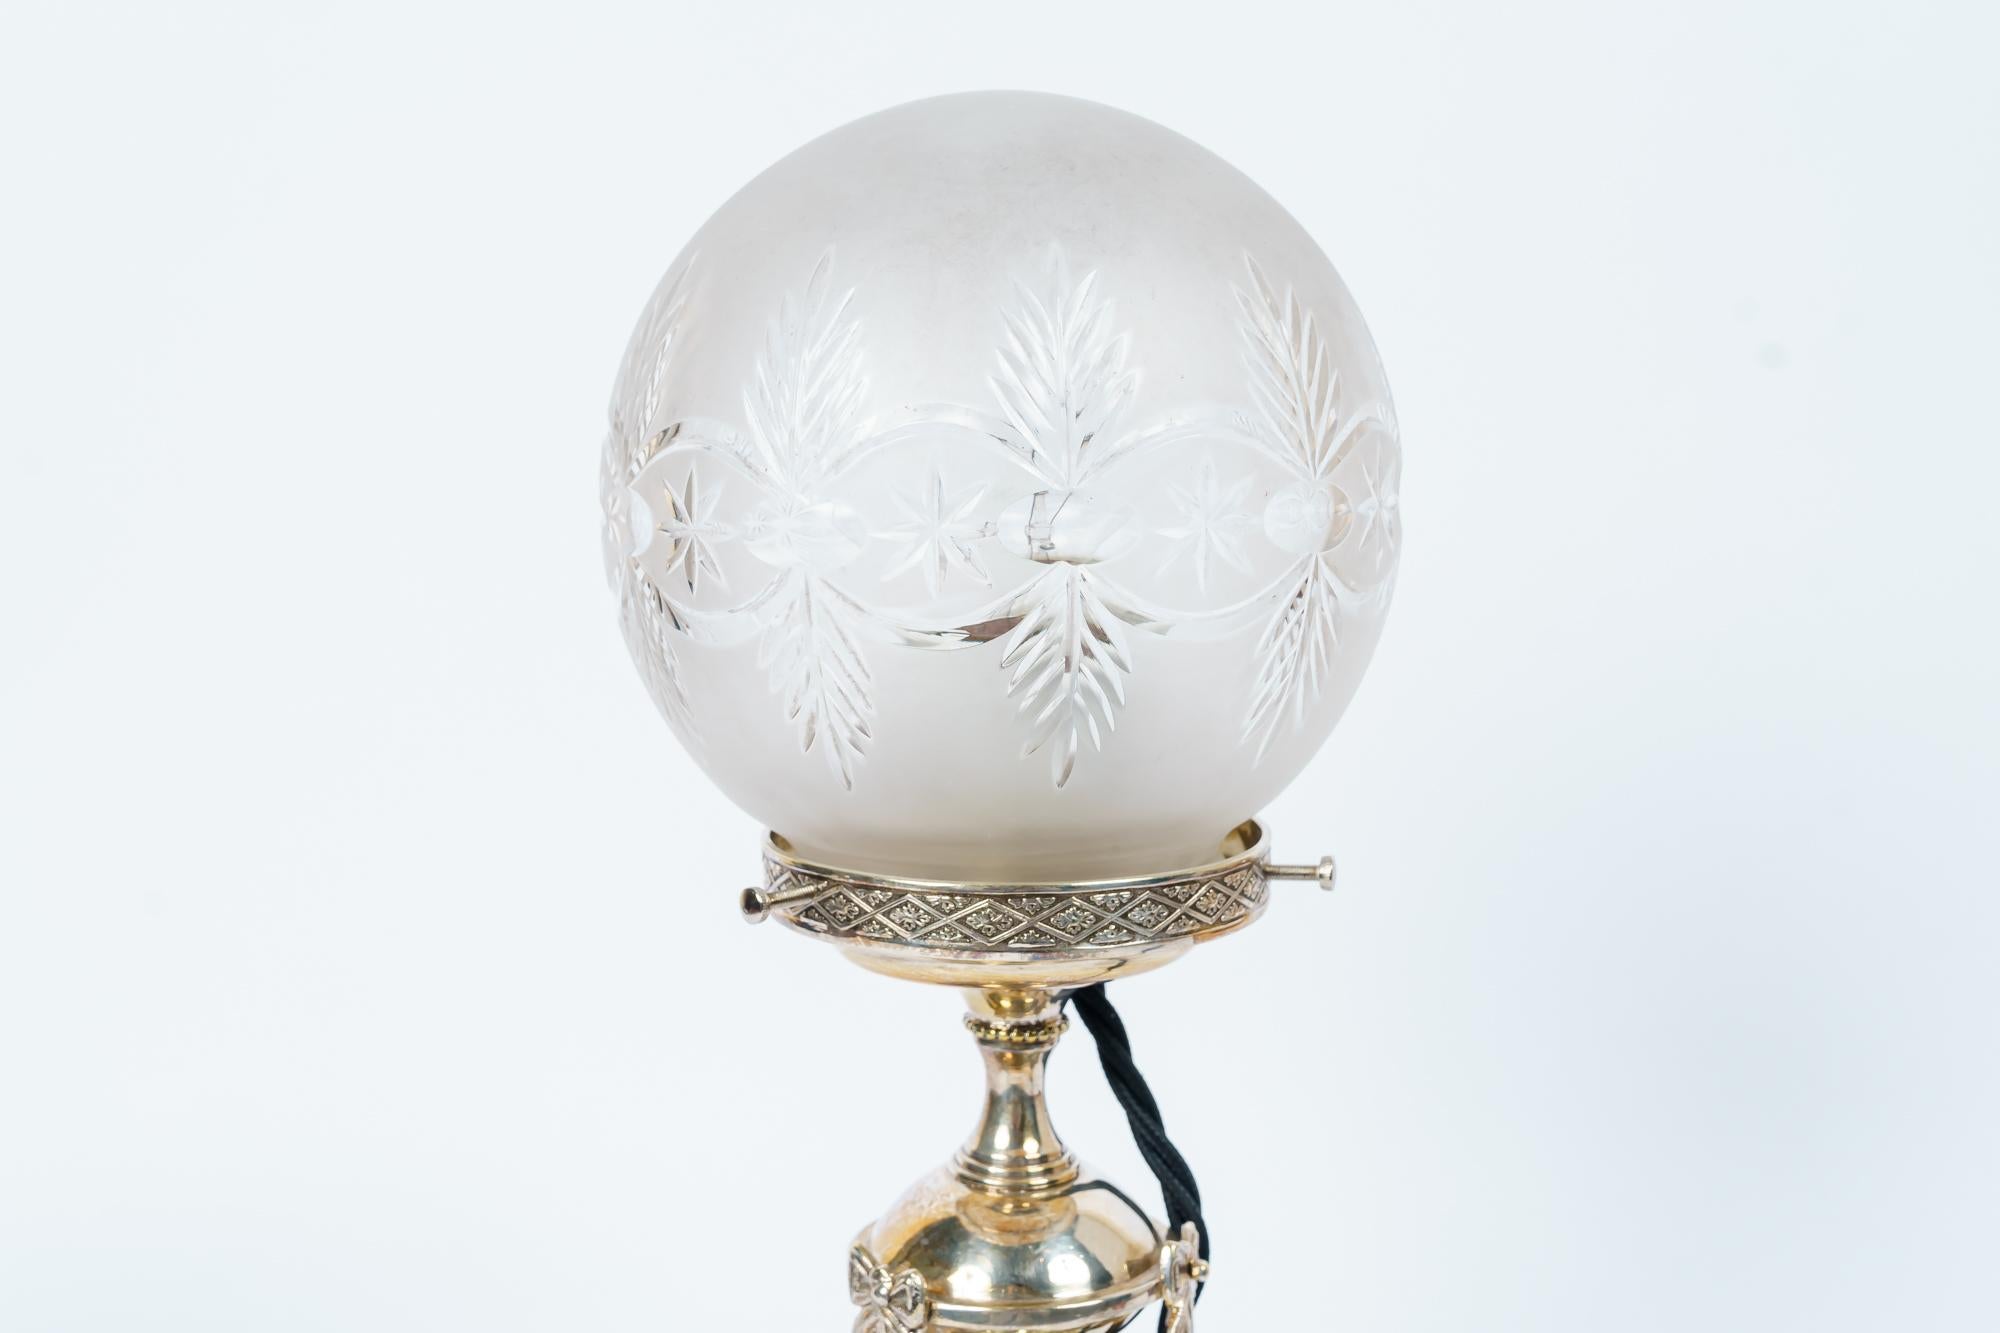 Lampe de table Jugendstil en alpaga, Vienne, vers 1908
Polis
Verre taillé original.